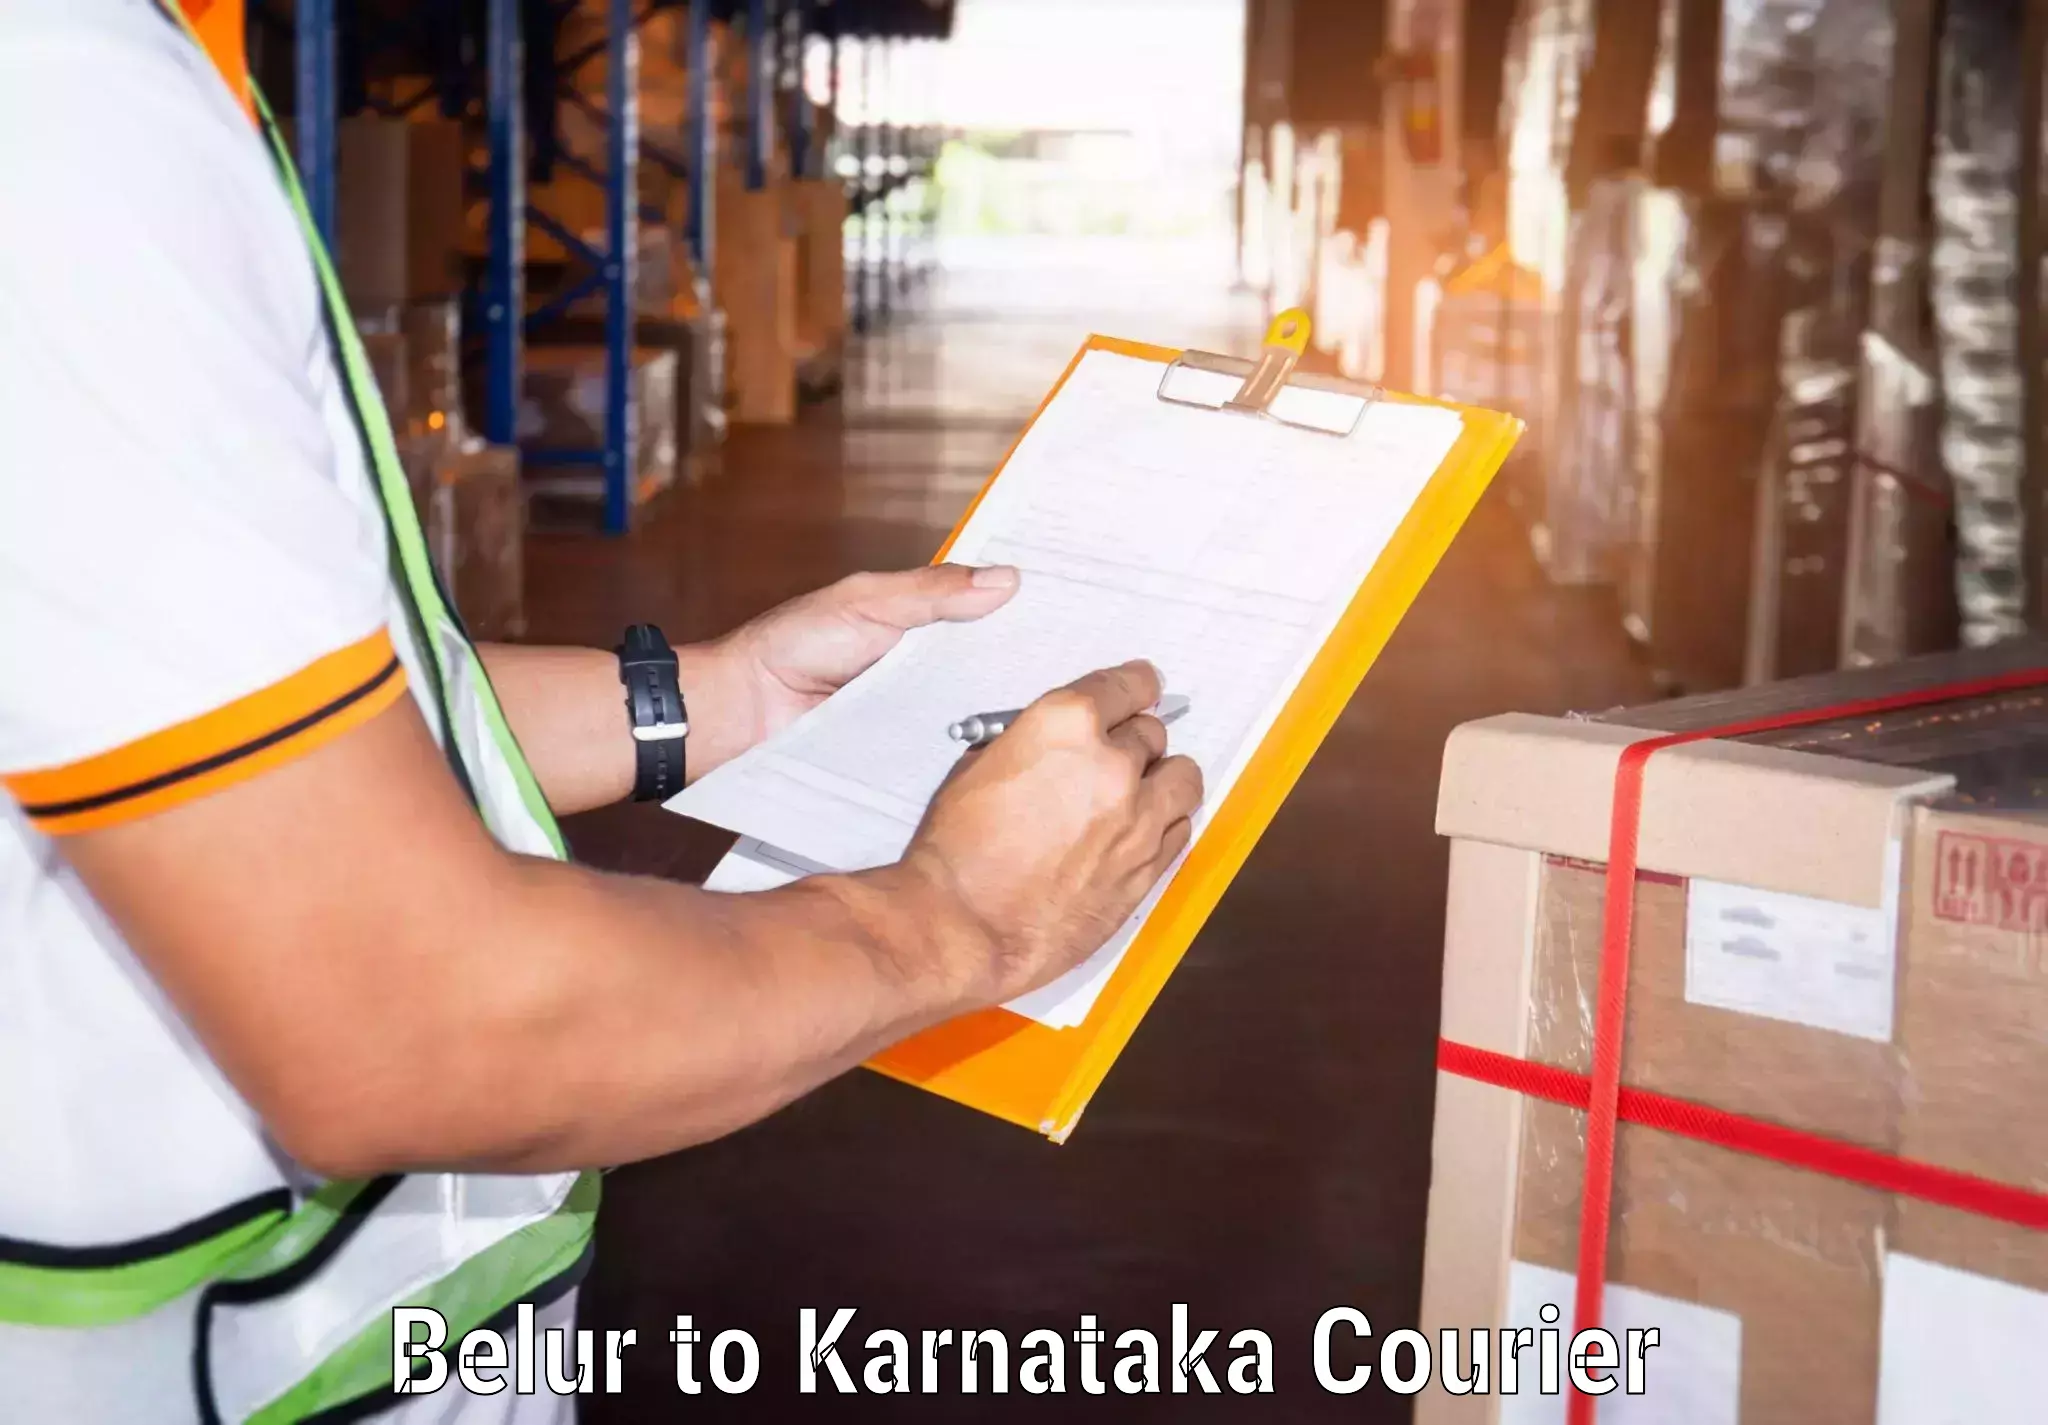 Courier service comparison Belur to Laxmeshwar